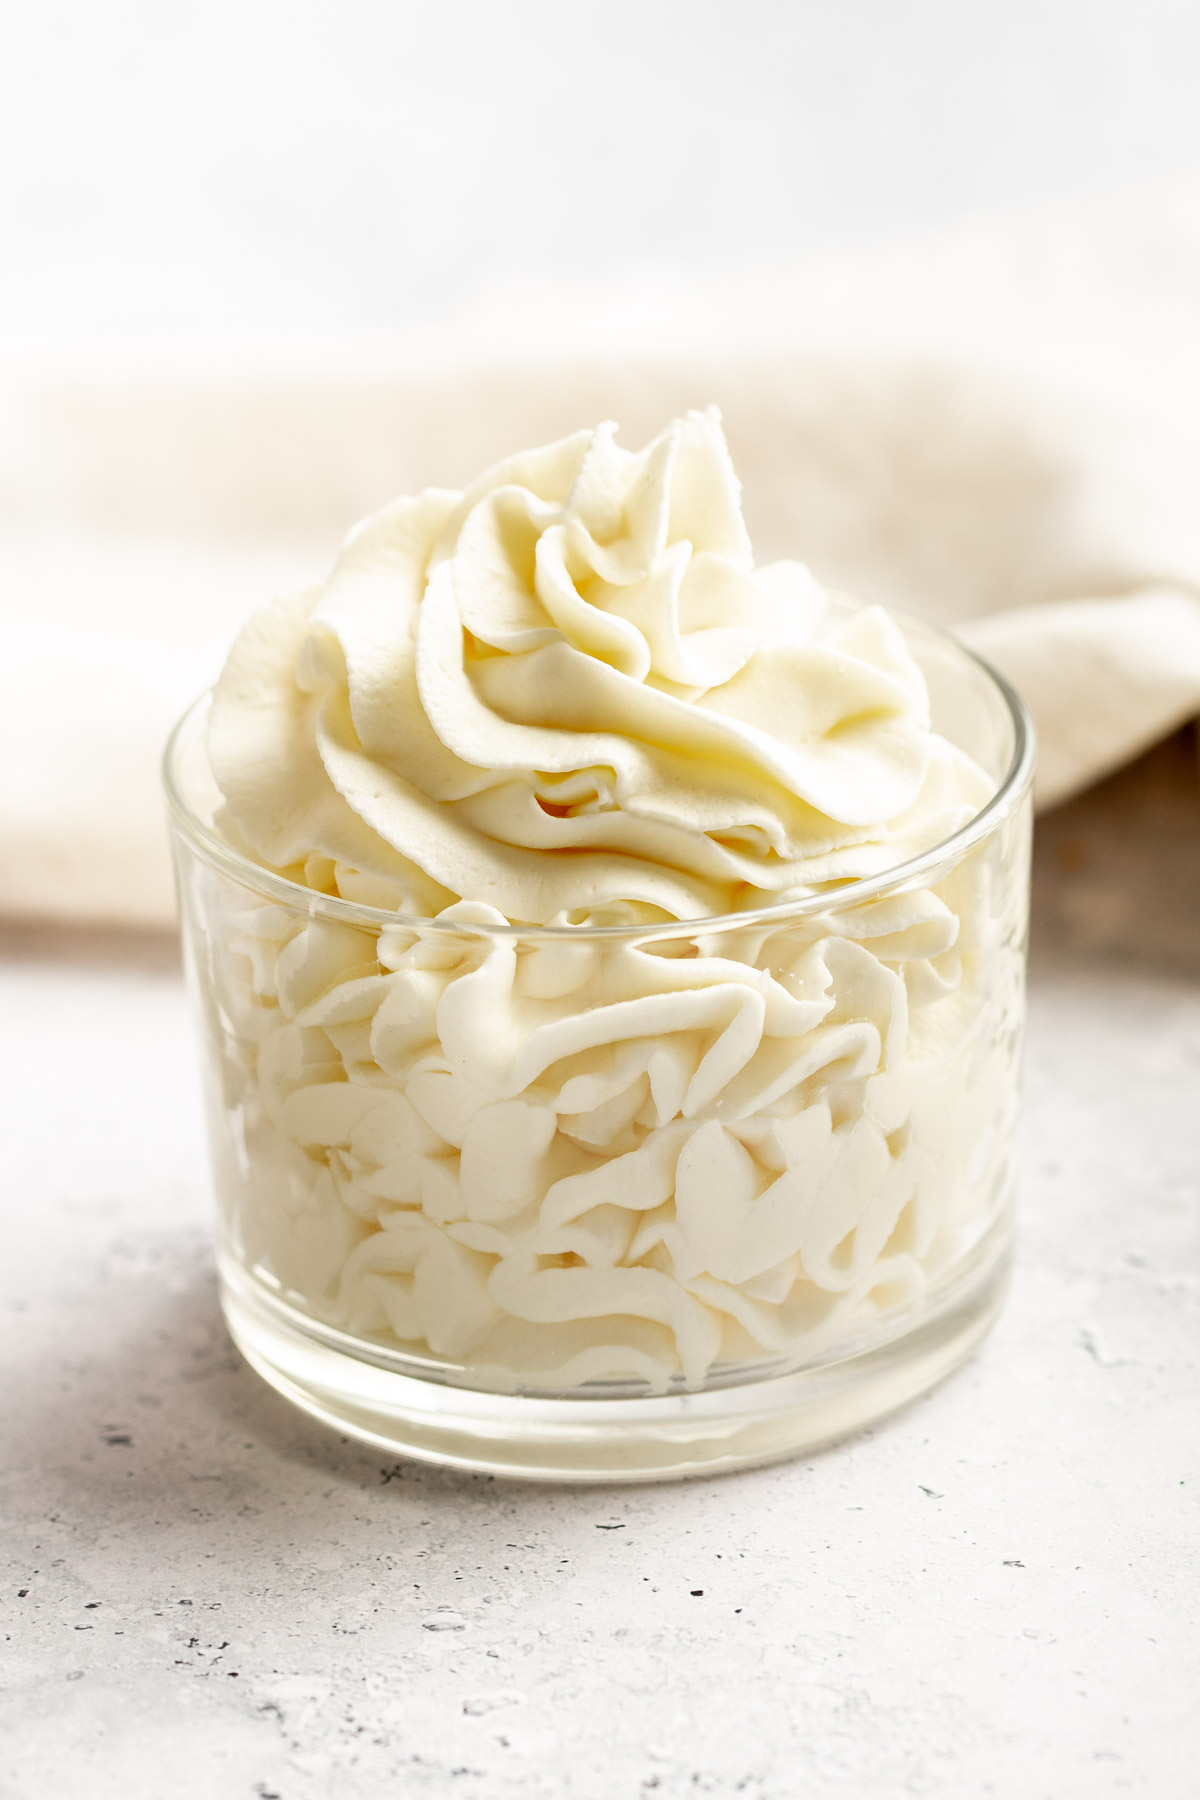 Mascarpone whipped cream in a glass.